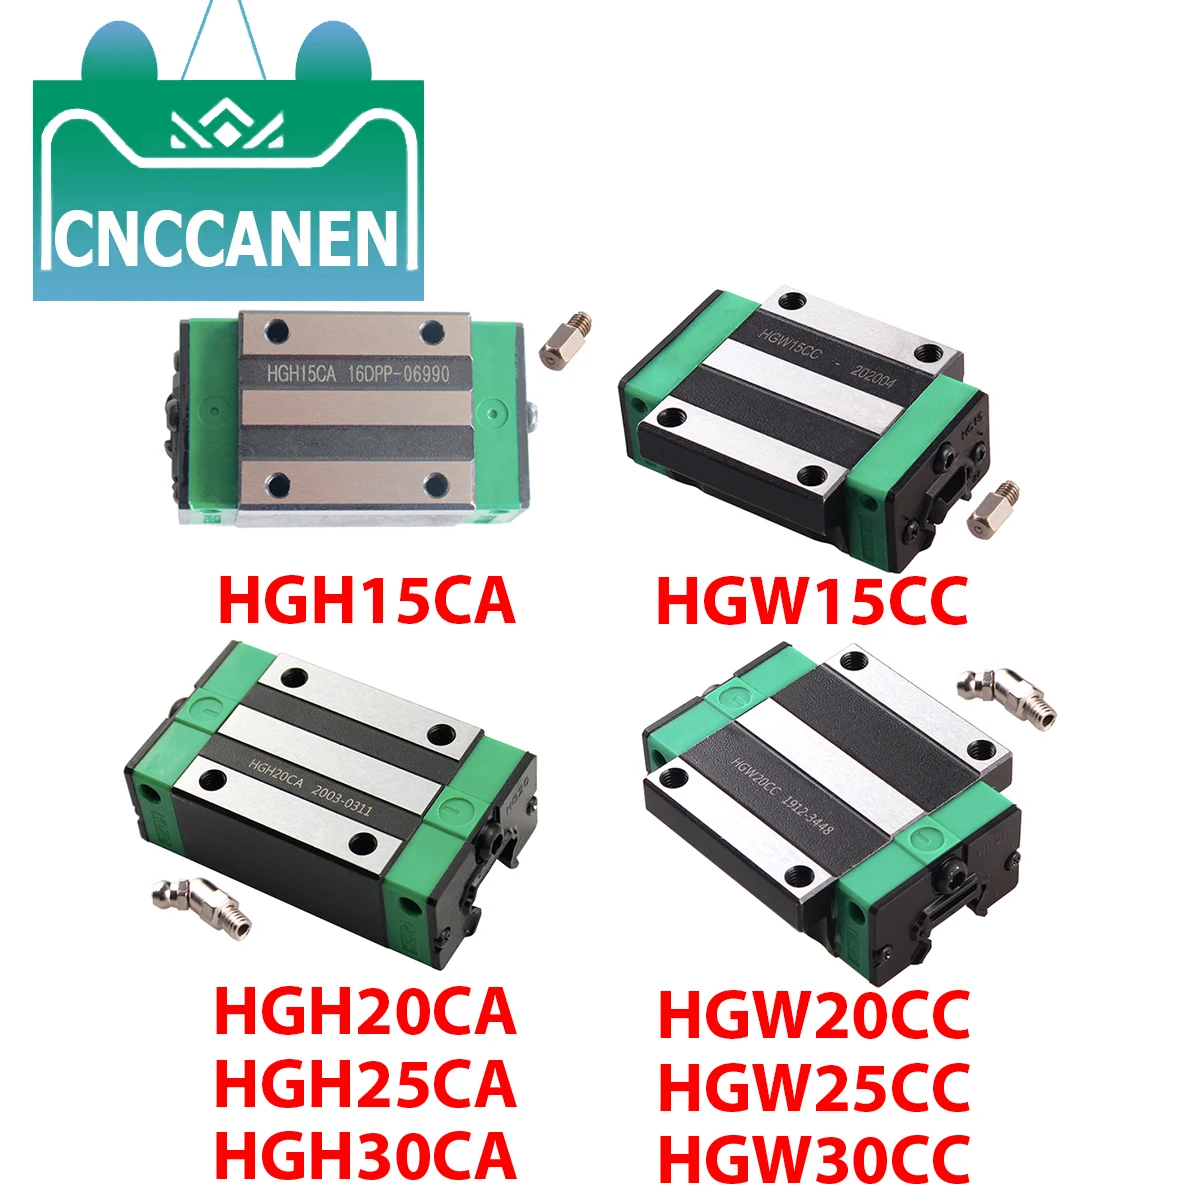 

HGH15CA HGW15CC HGH20CA HGW20CC HGH25CA HGW25CC HGH30CA HGW30CC Slide Block Carriage match use HGR 15 20 25 30 Linear Guide Rail